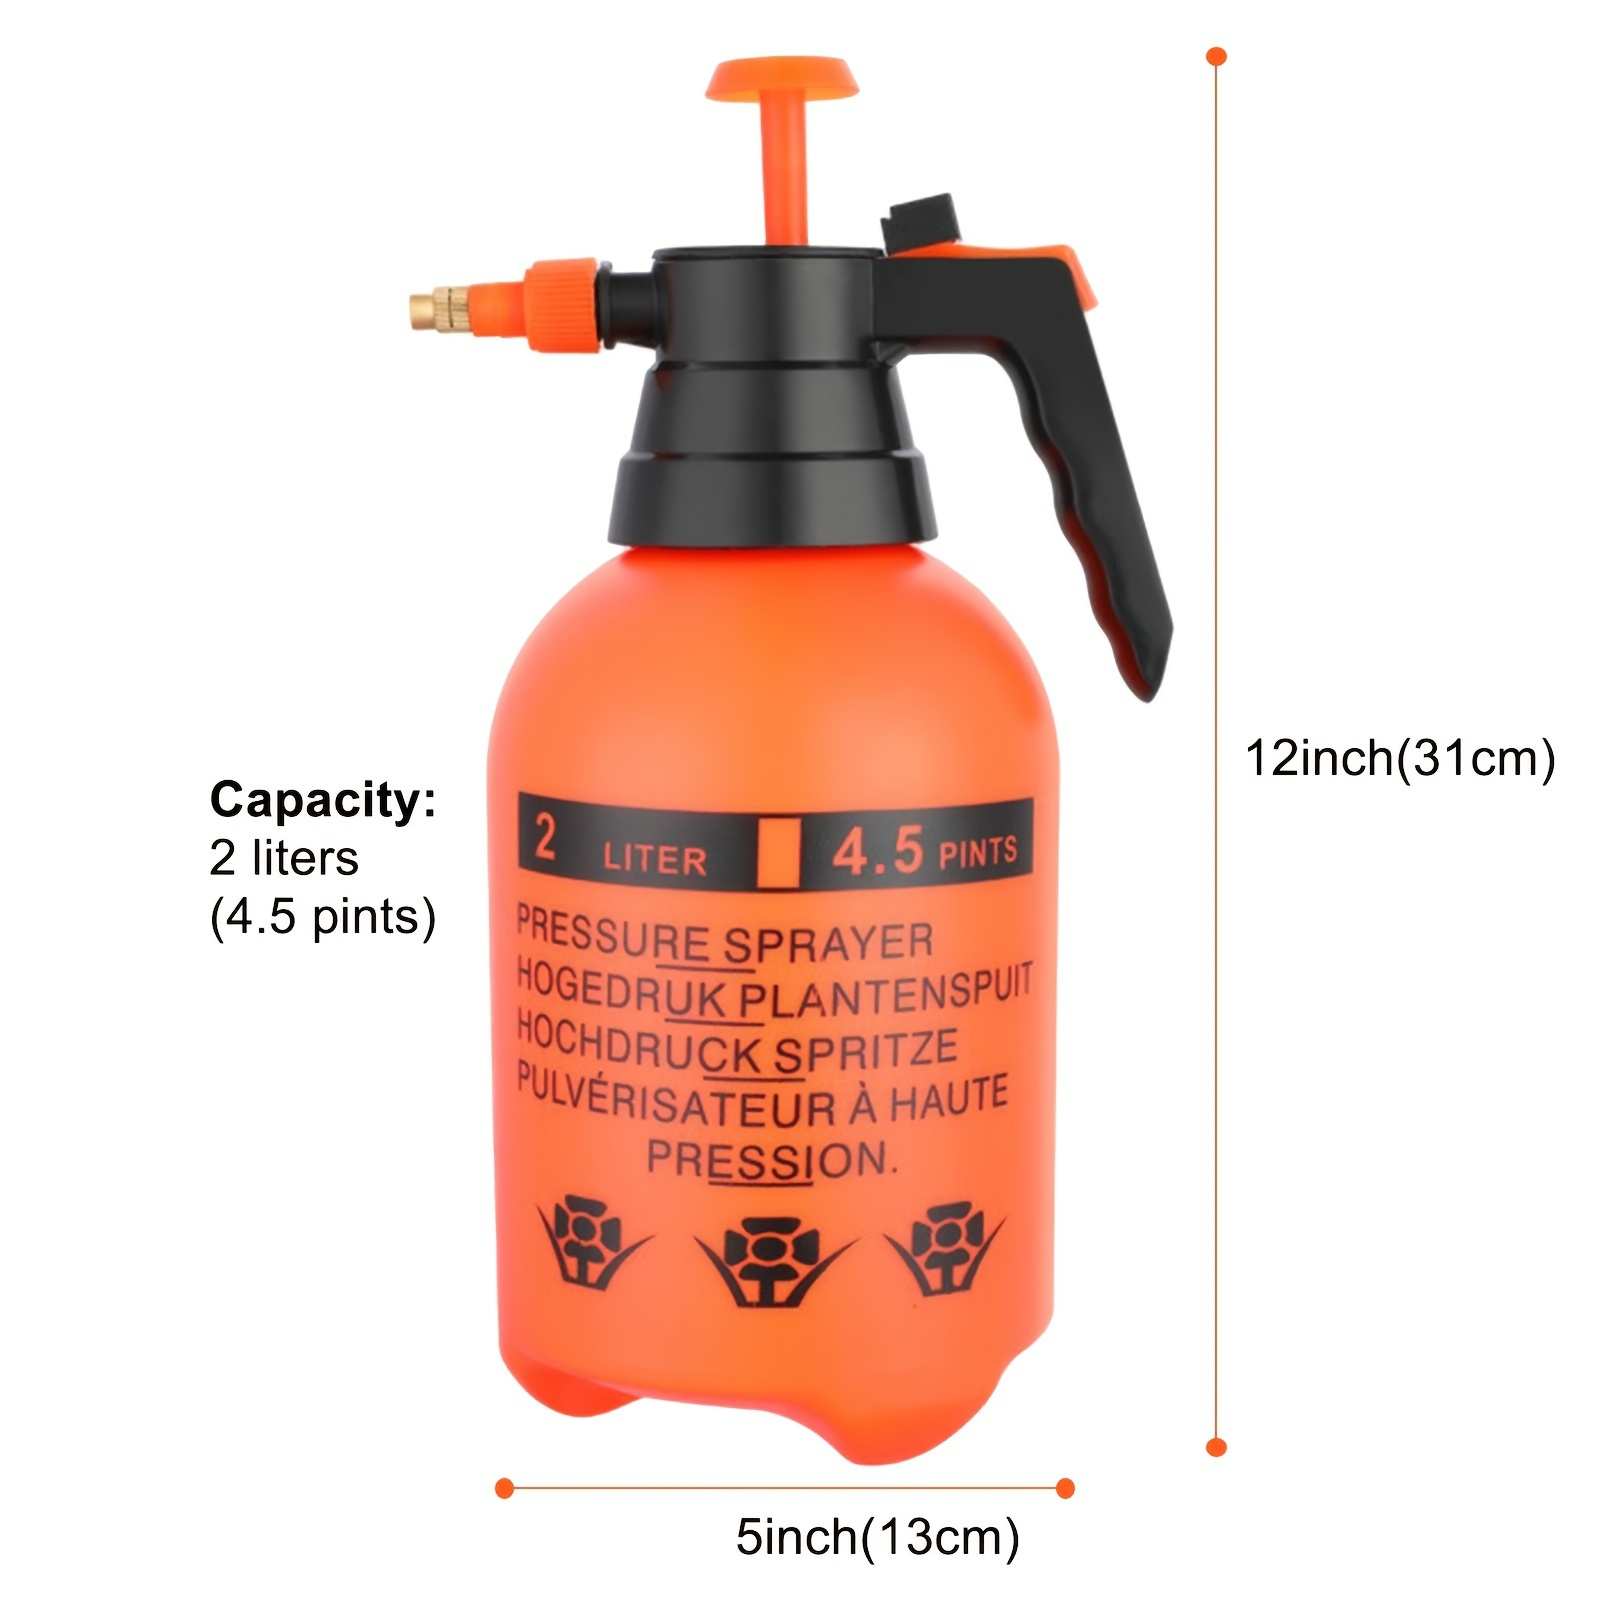 Buy Pressure sprayer online